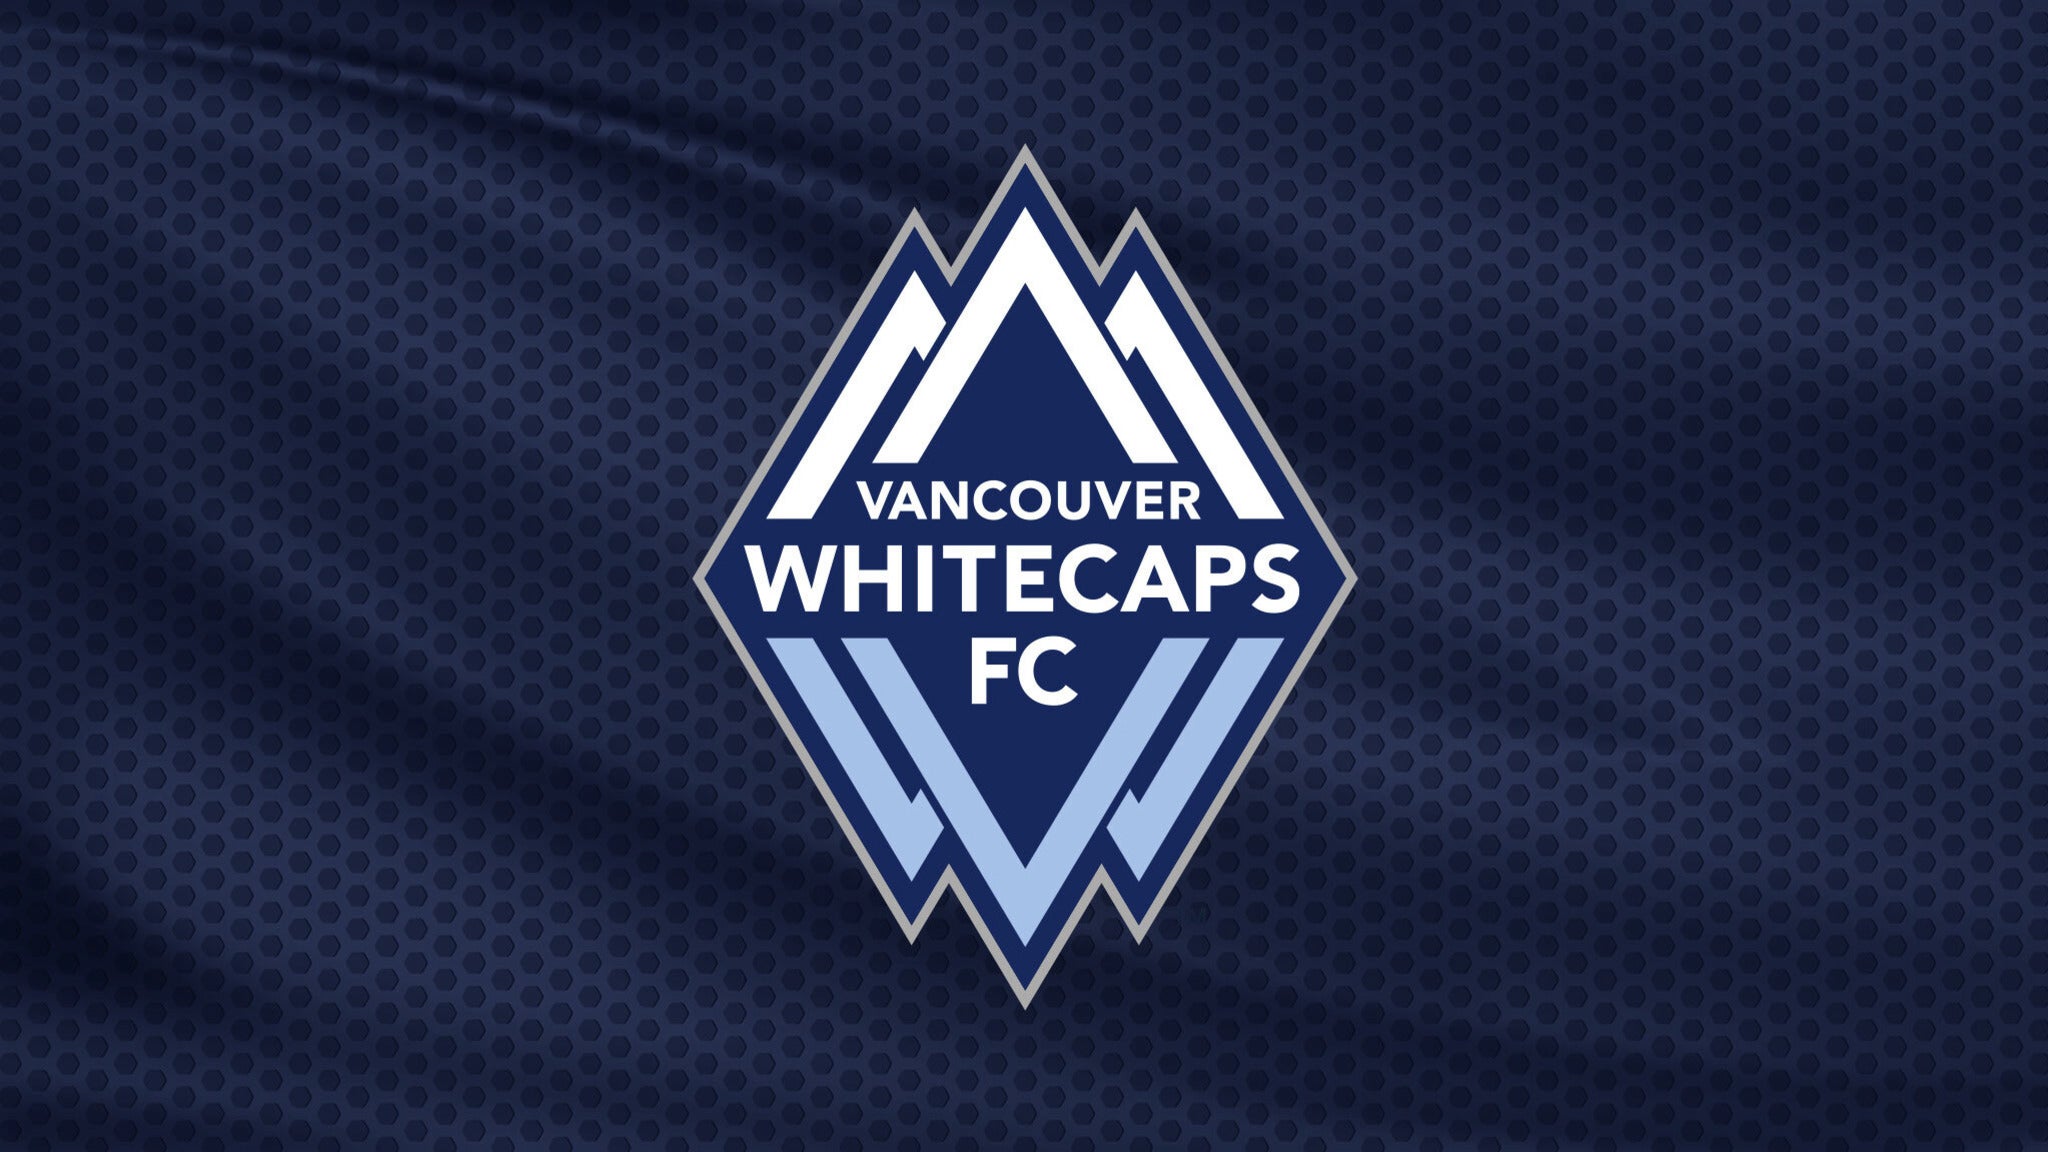 Vancouver Whitecaps FC vs. Sporting Kansas City in Vancouver promo photo for Vancouver Whitecaps FC Exclusive presale offer code